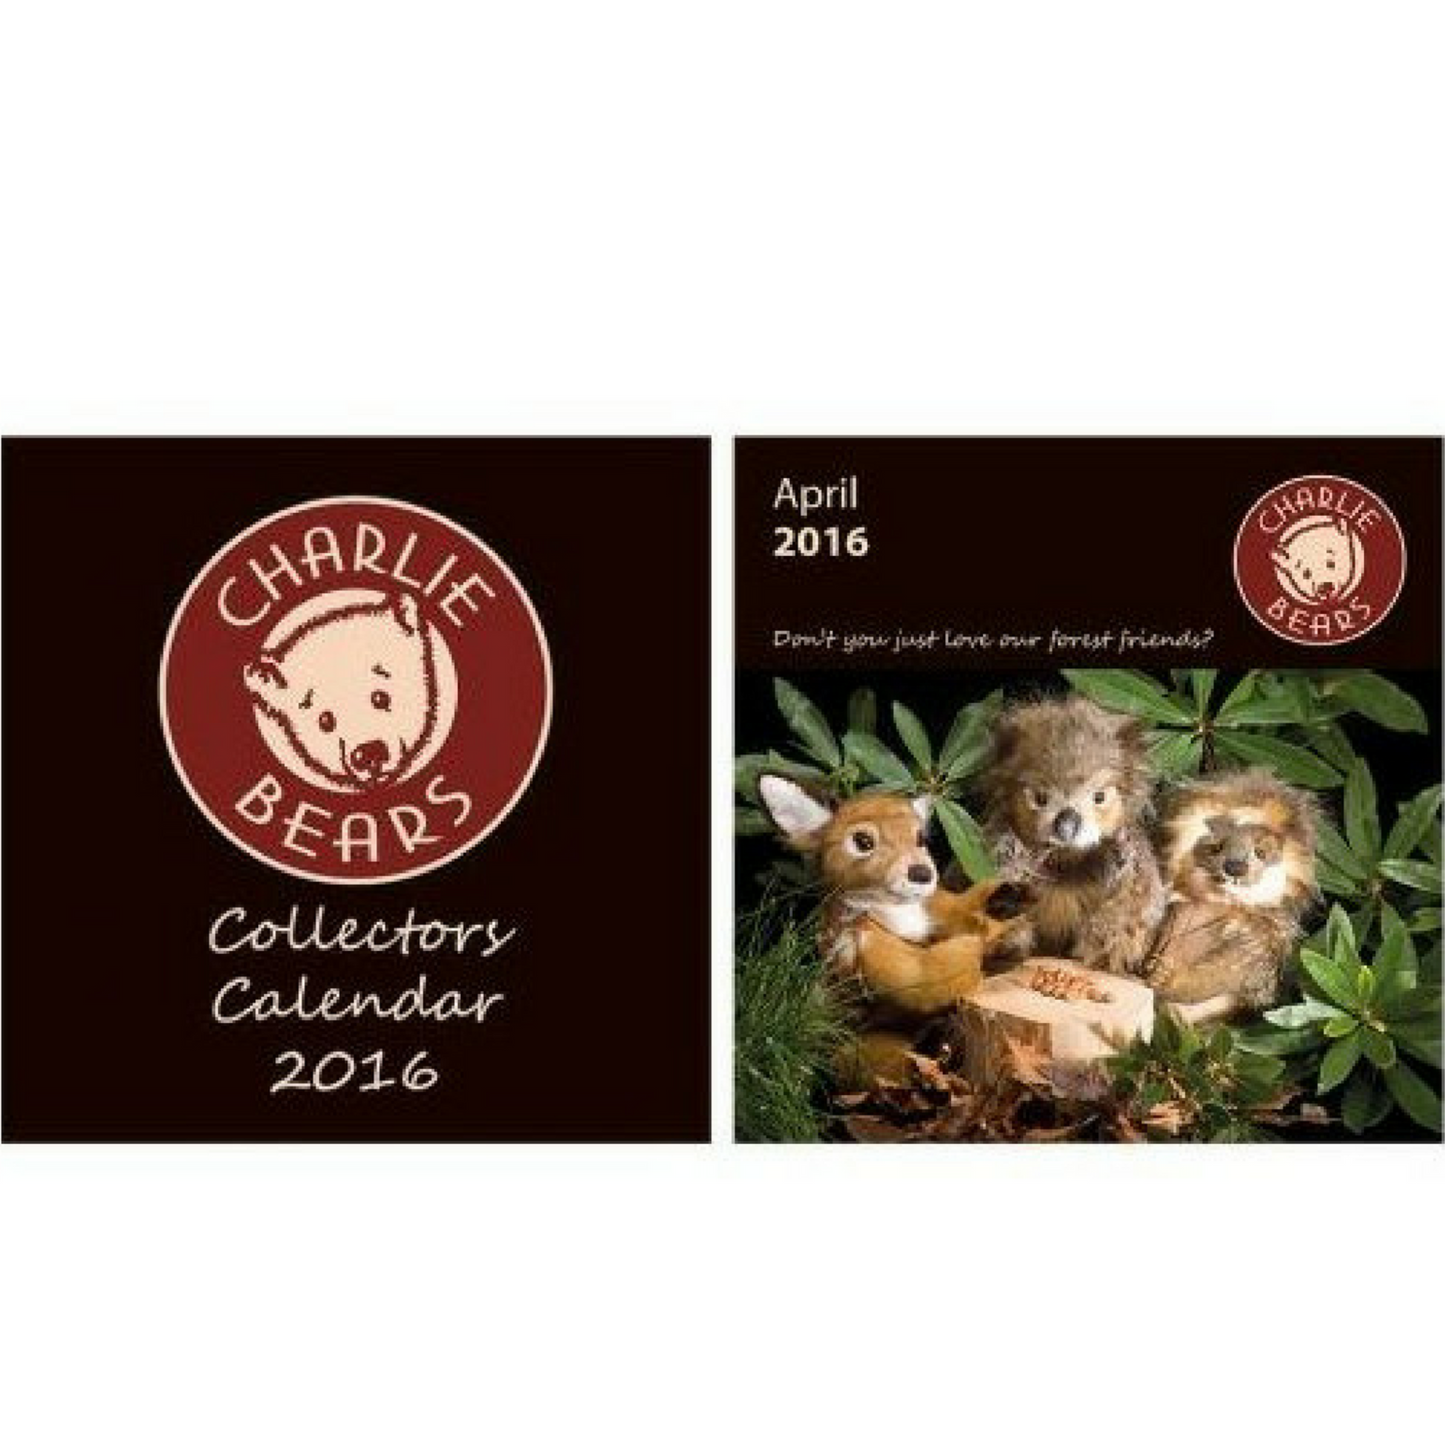 Charlie Bears Collectors Calendar 2016